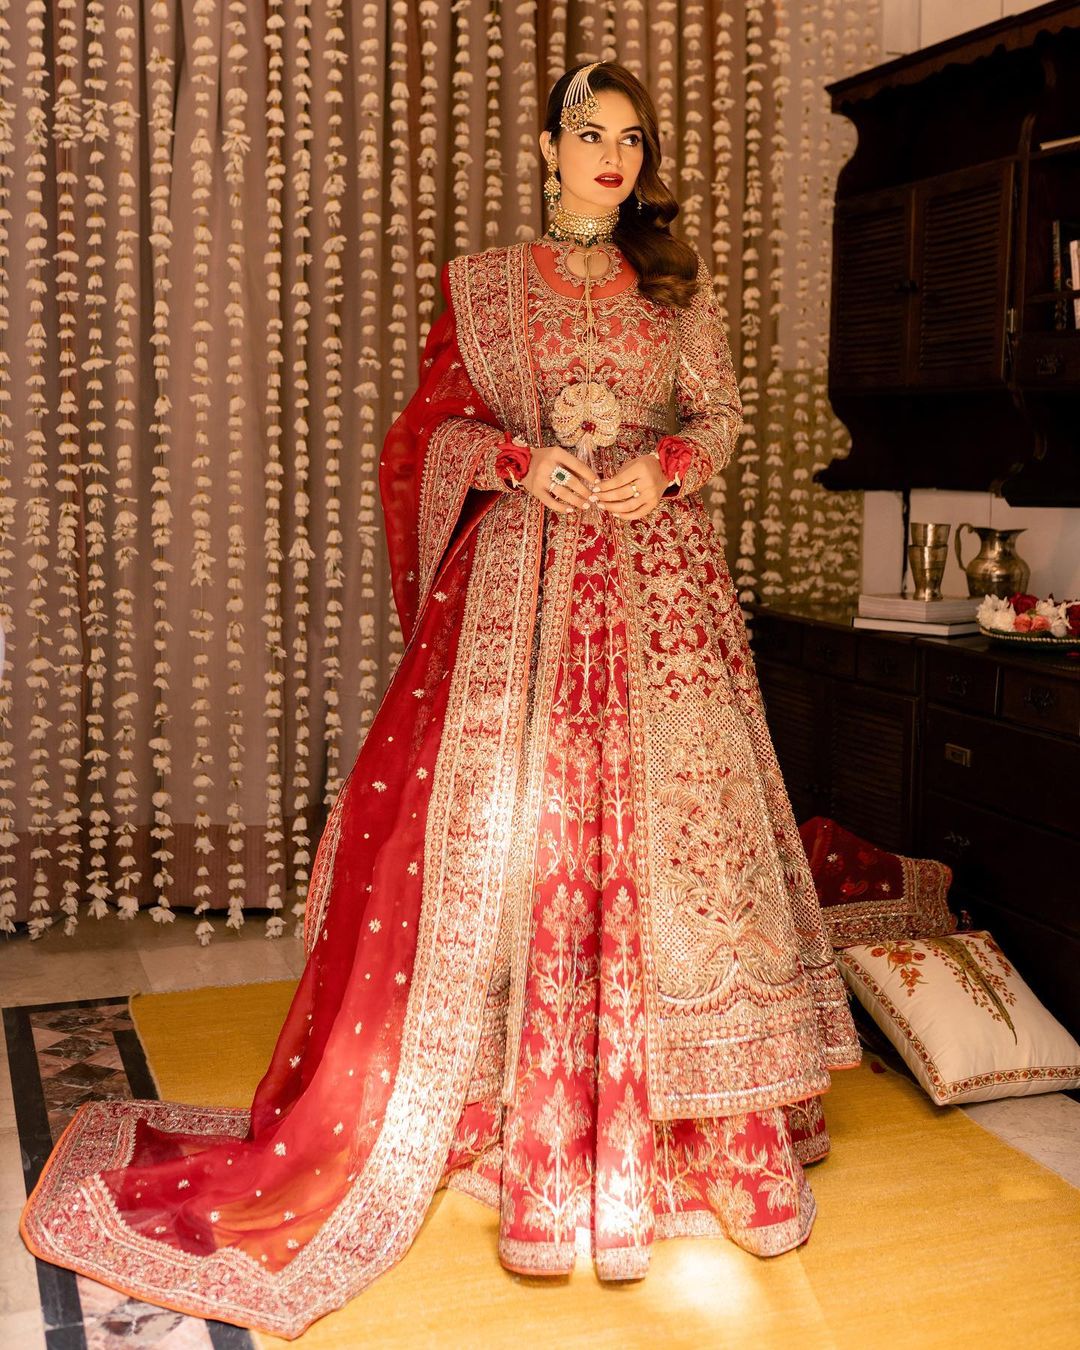 Minal Khan Bridal Photo Shoot for Hussain Rehar